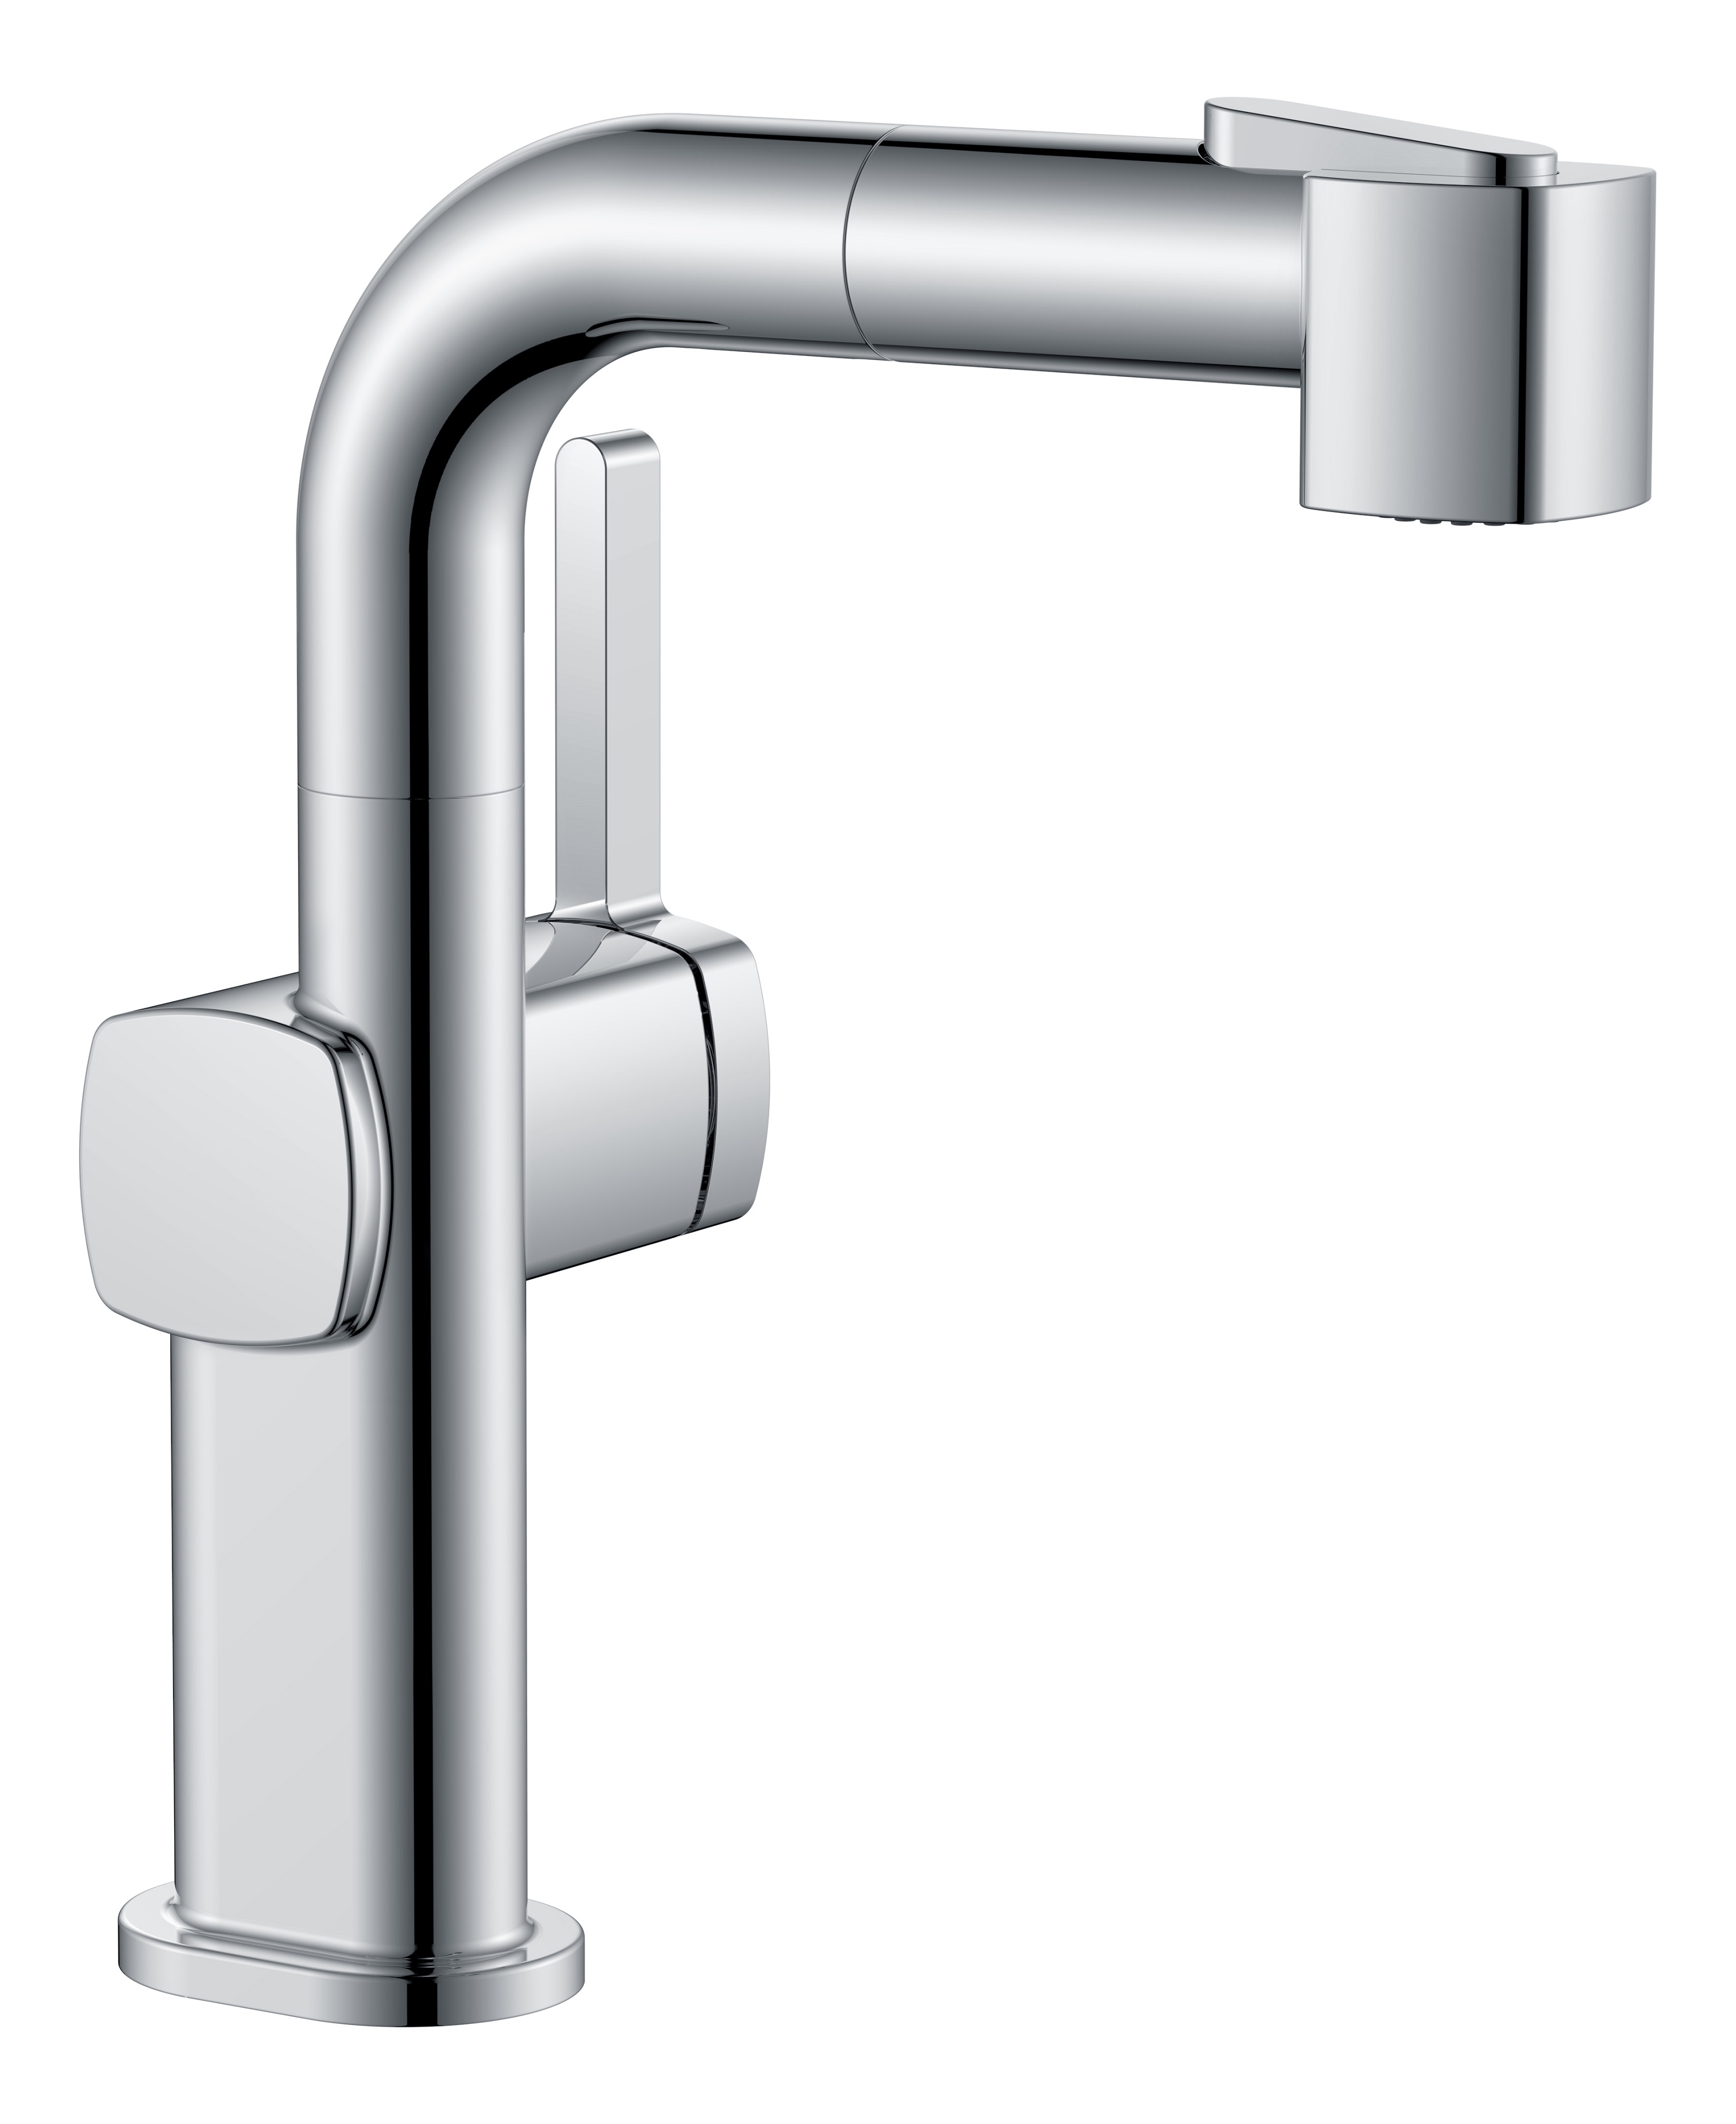 Balck Stainless Adjustable Height Single Hole Bathroom Faucet